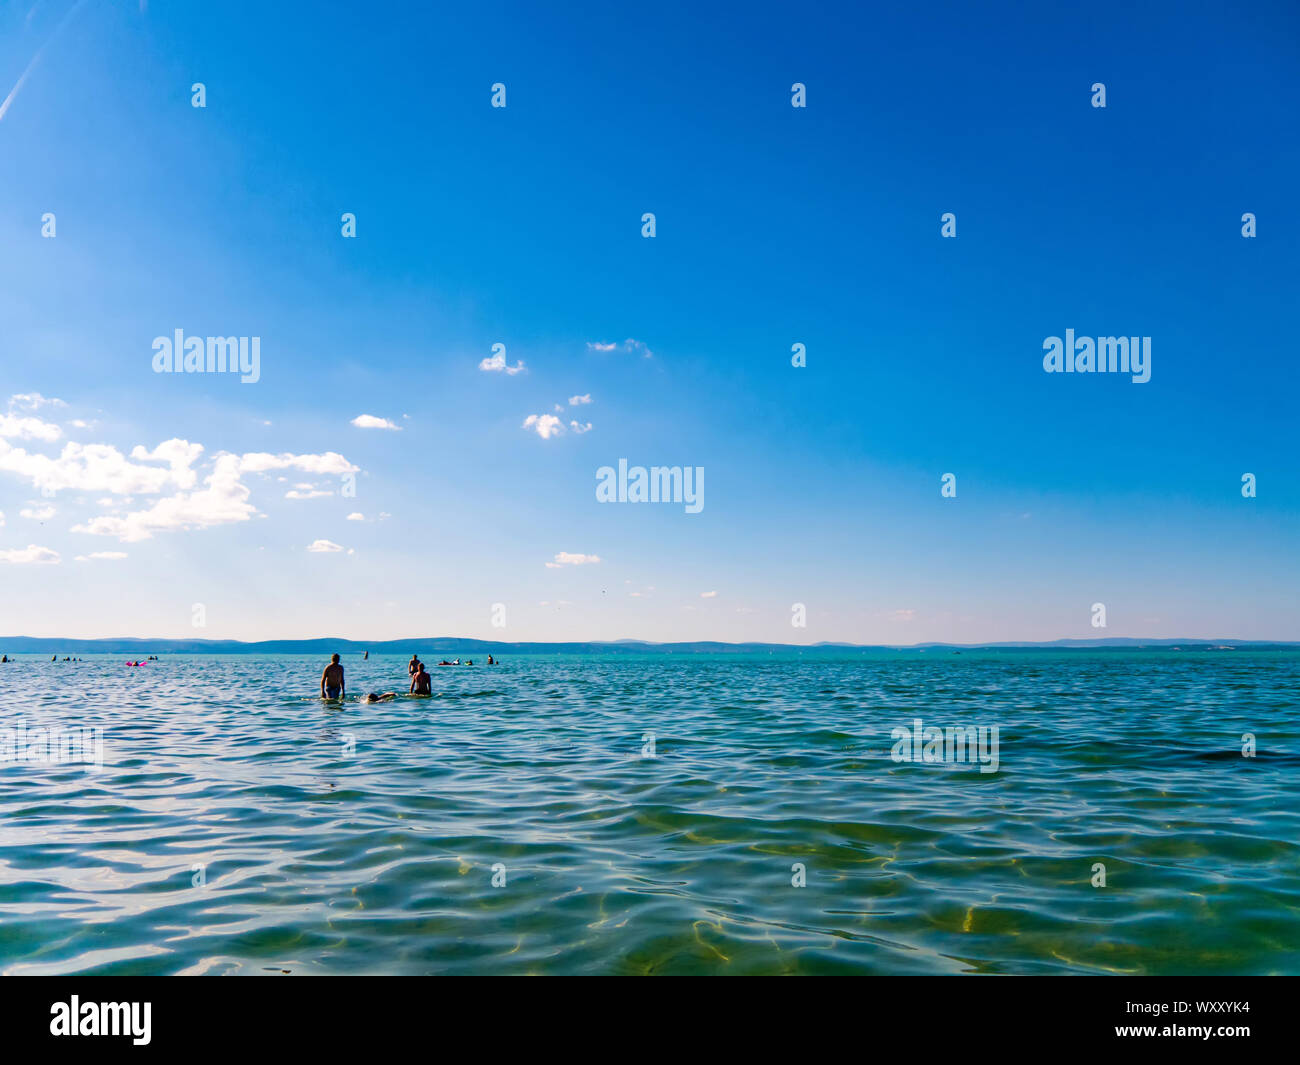 Beach siofok lake balaton hungary hi-res stock photography and images -  Page 3 - Alamy